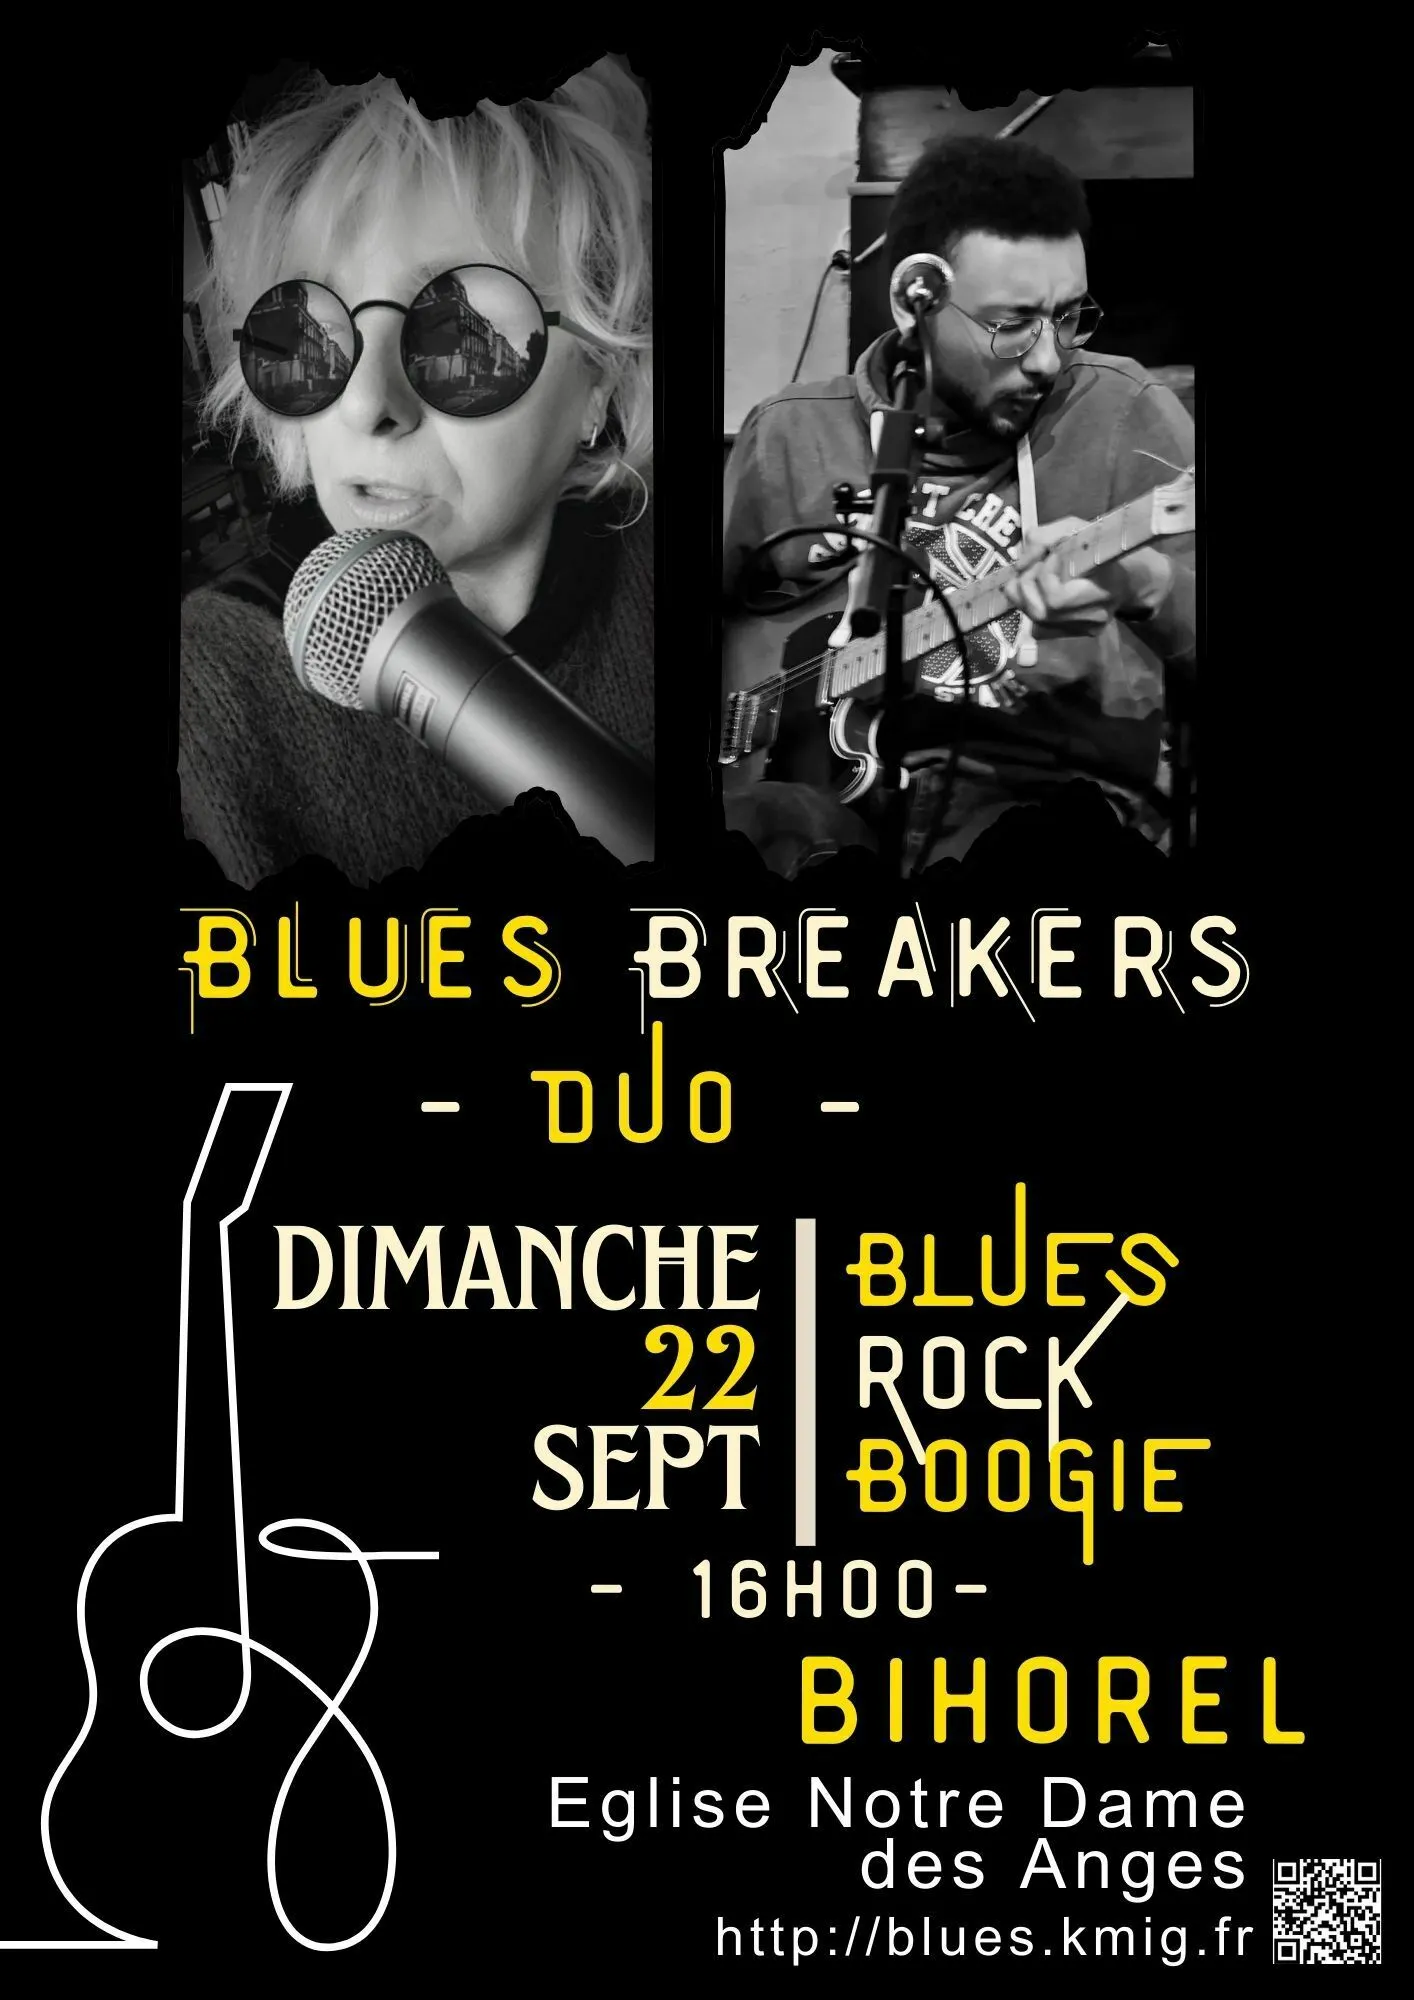 Image qui illustre: Concert des Blues Breakers Duo à Bihorel - 0